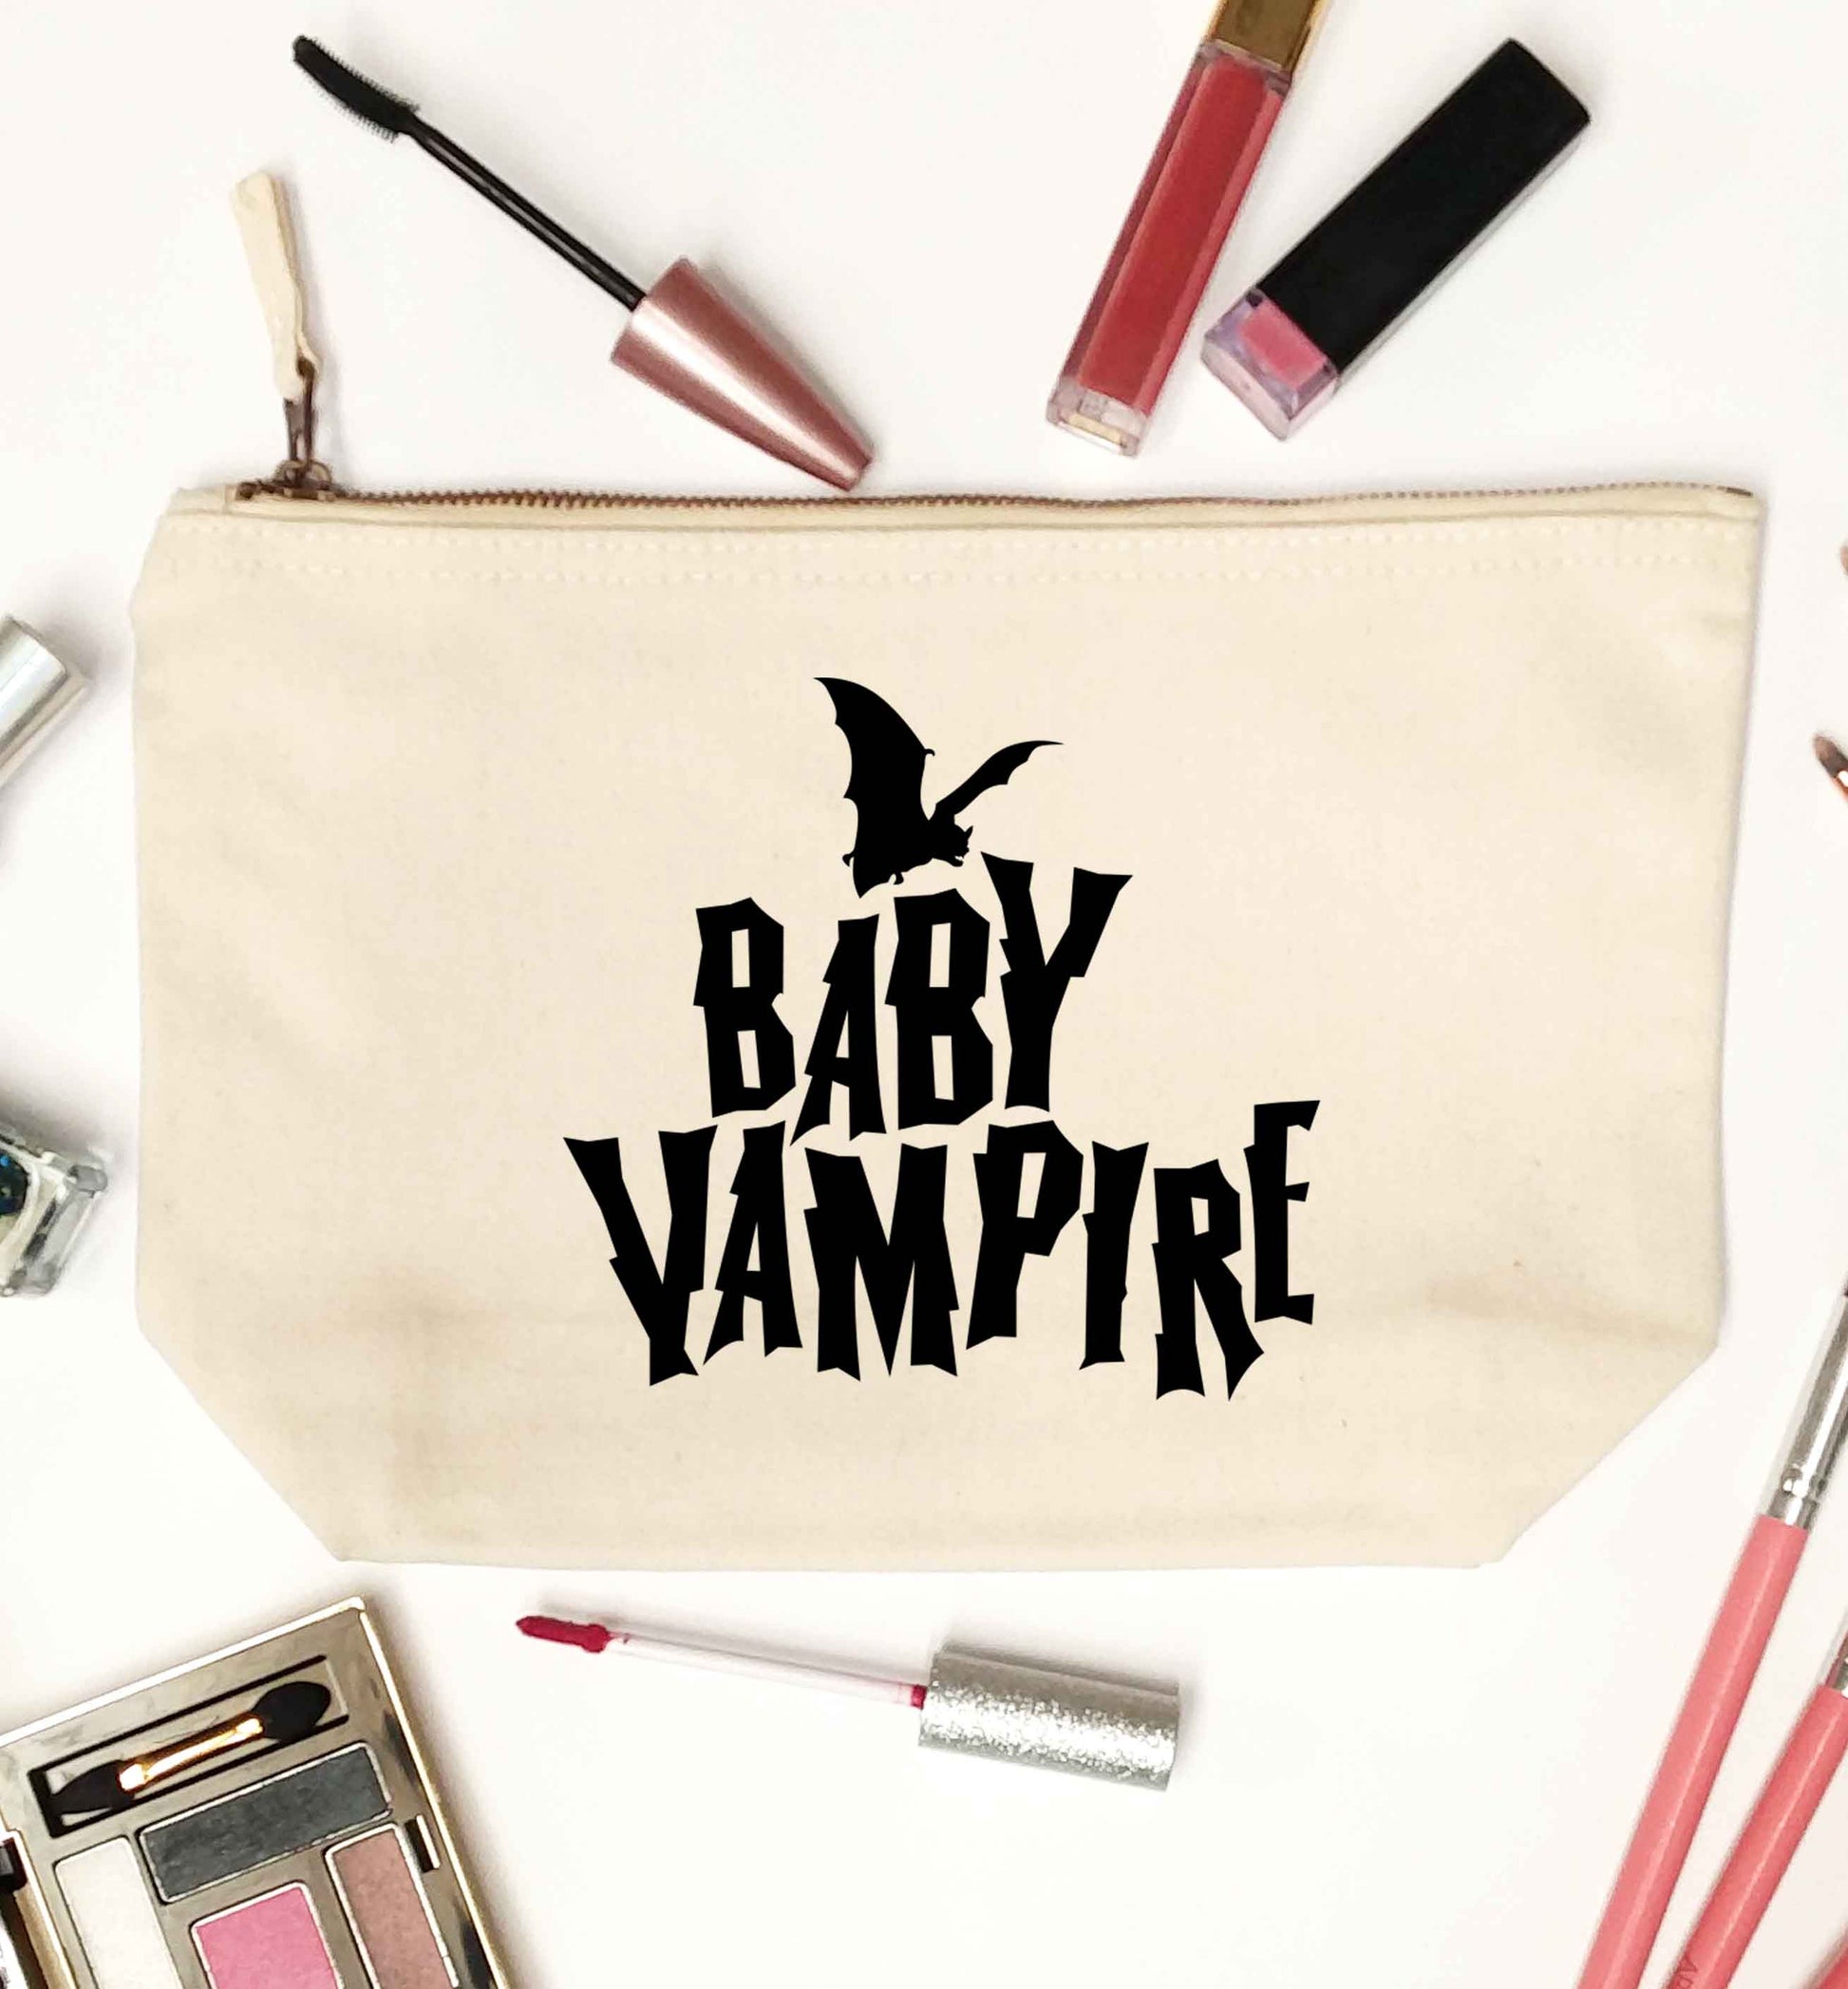 Baby vampire natural makeup bag